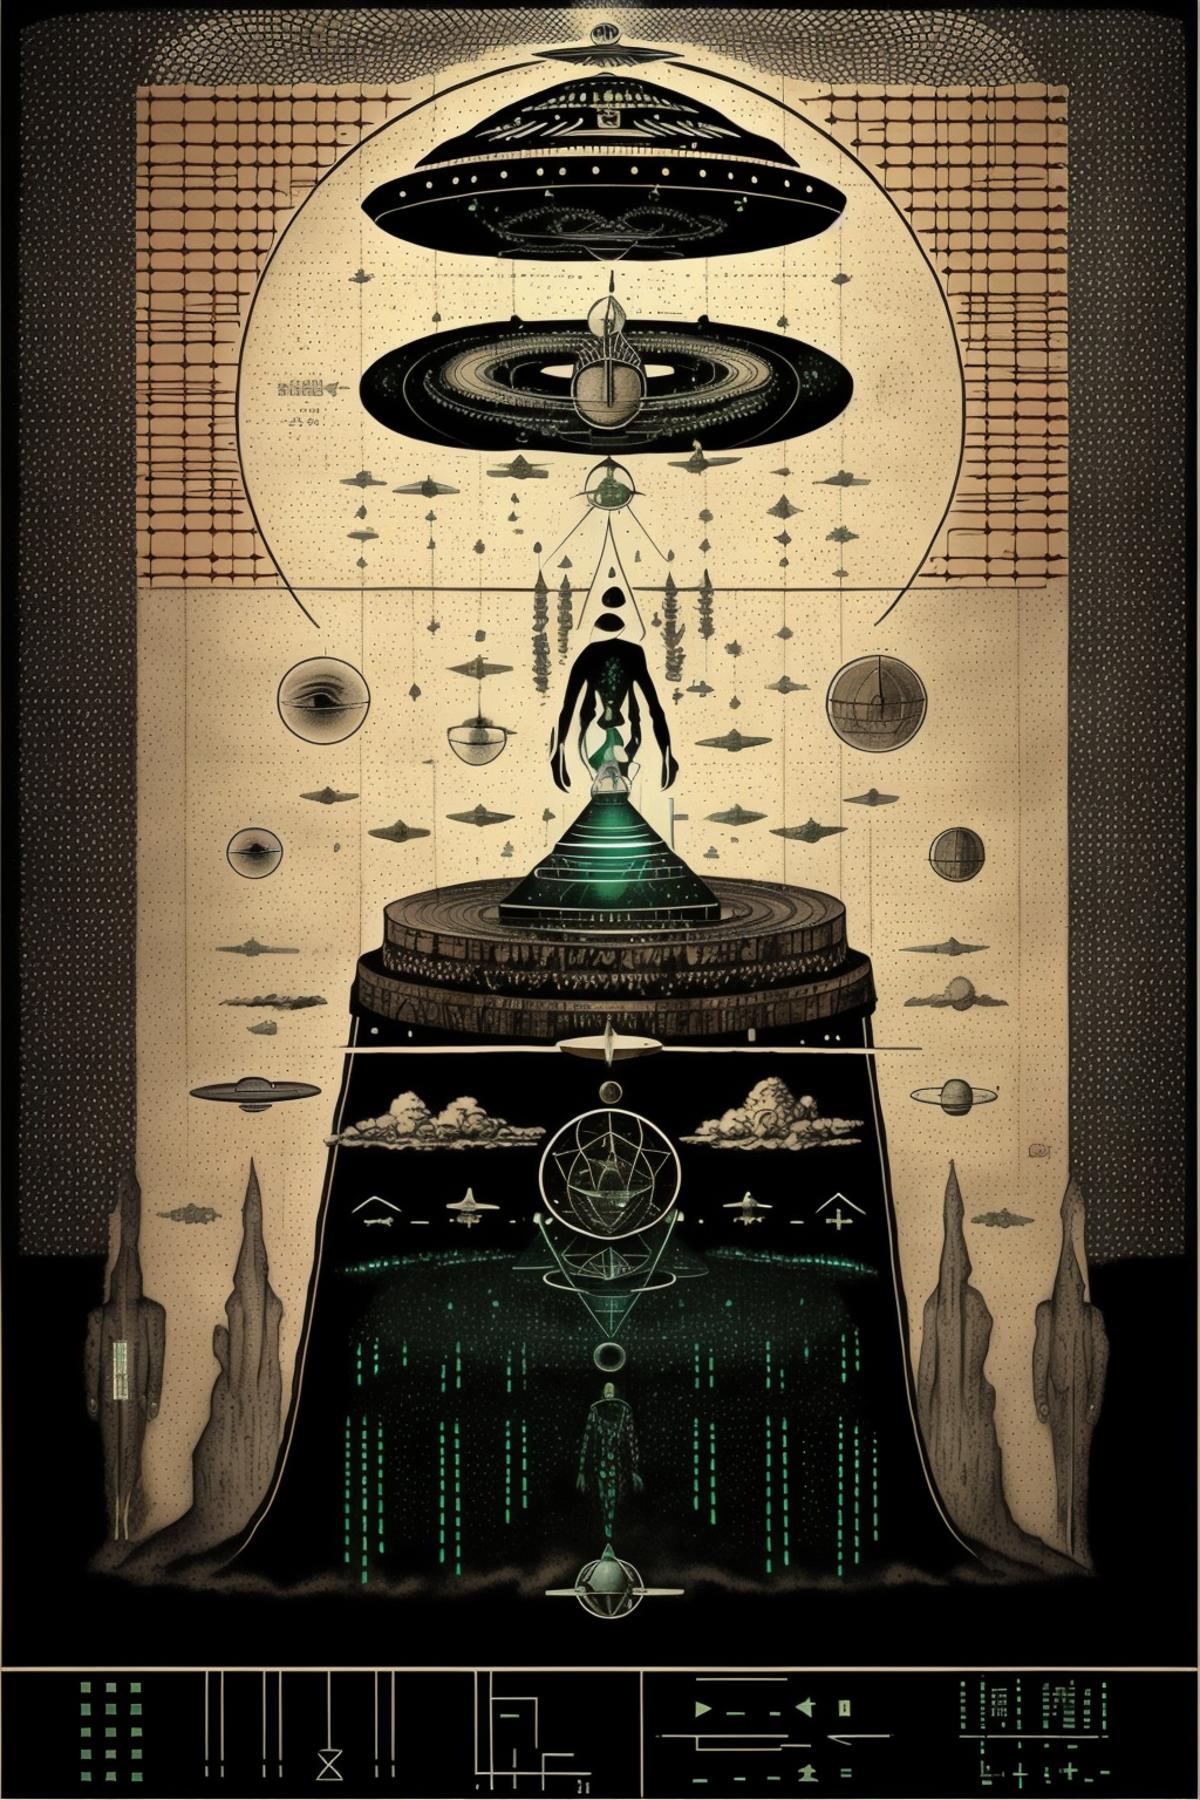 UFO Alchemy image by Ciro_Negrogni